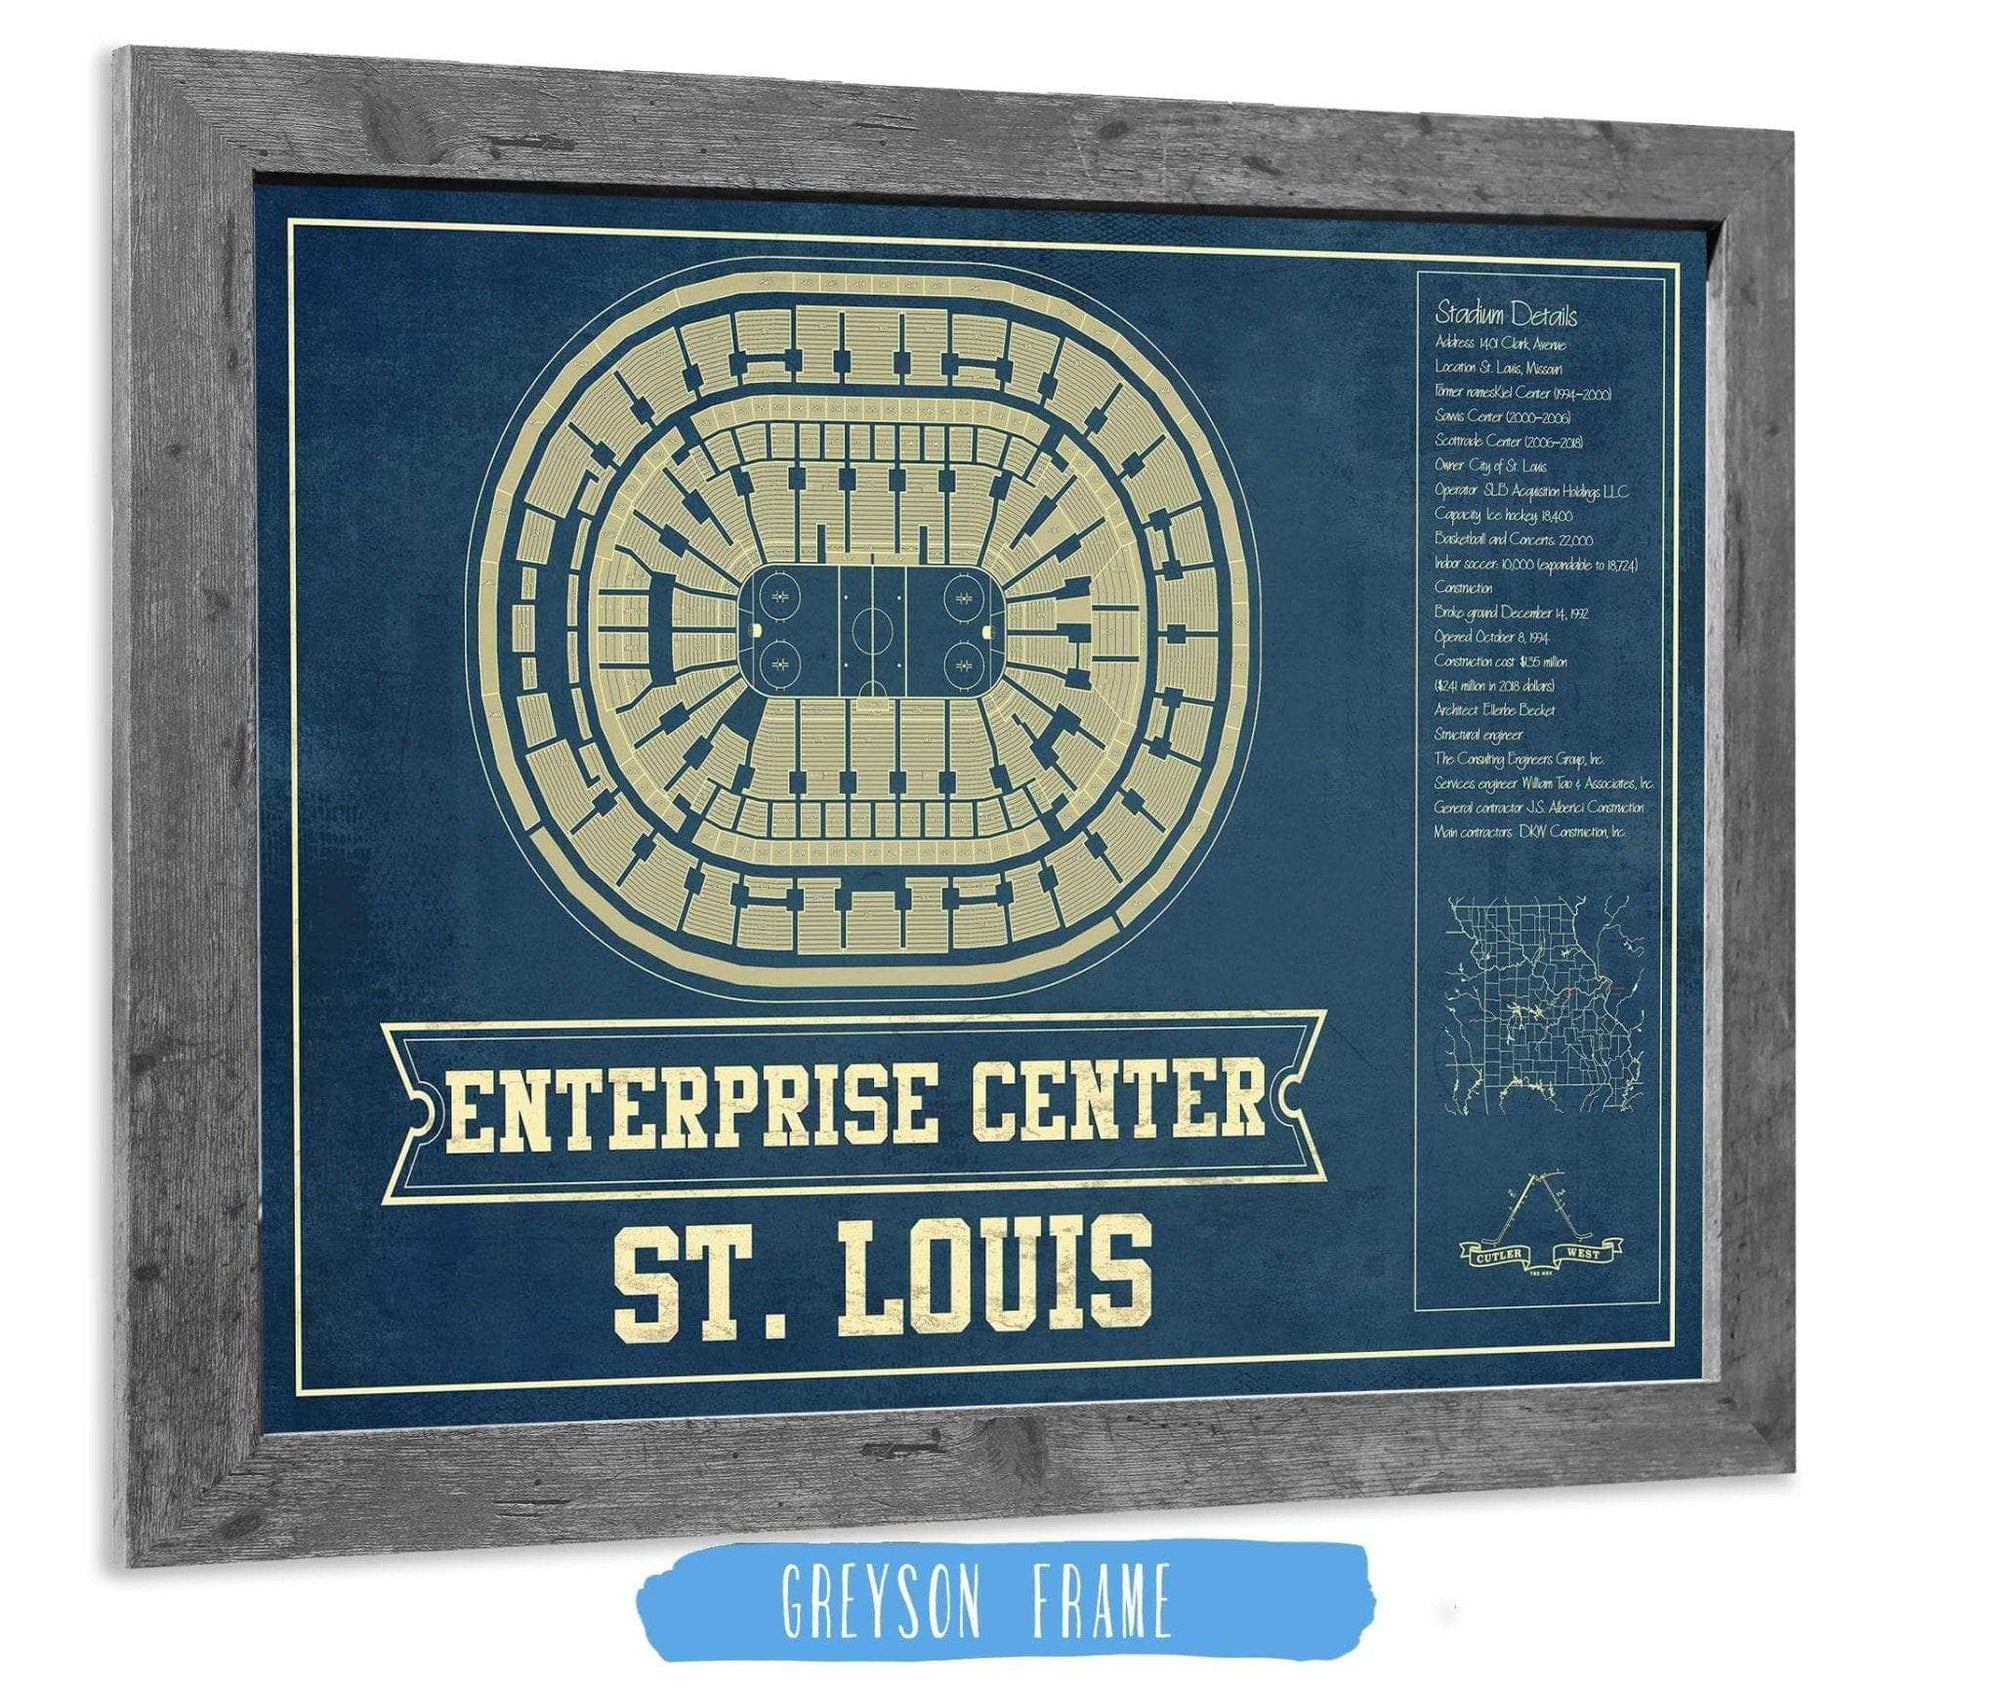 Cutler West 14" x 11" / Greyson Frame St. Louis Blues - Enterprise Center Vintage Hockey Blueprint NHL Print 933350220_81123